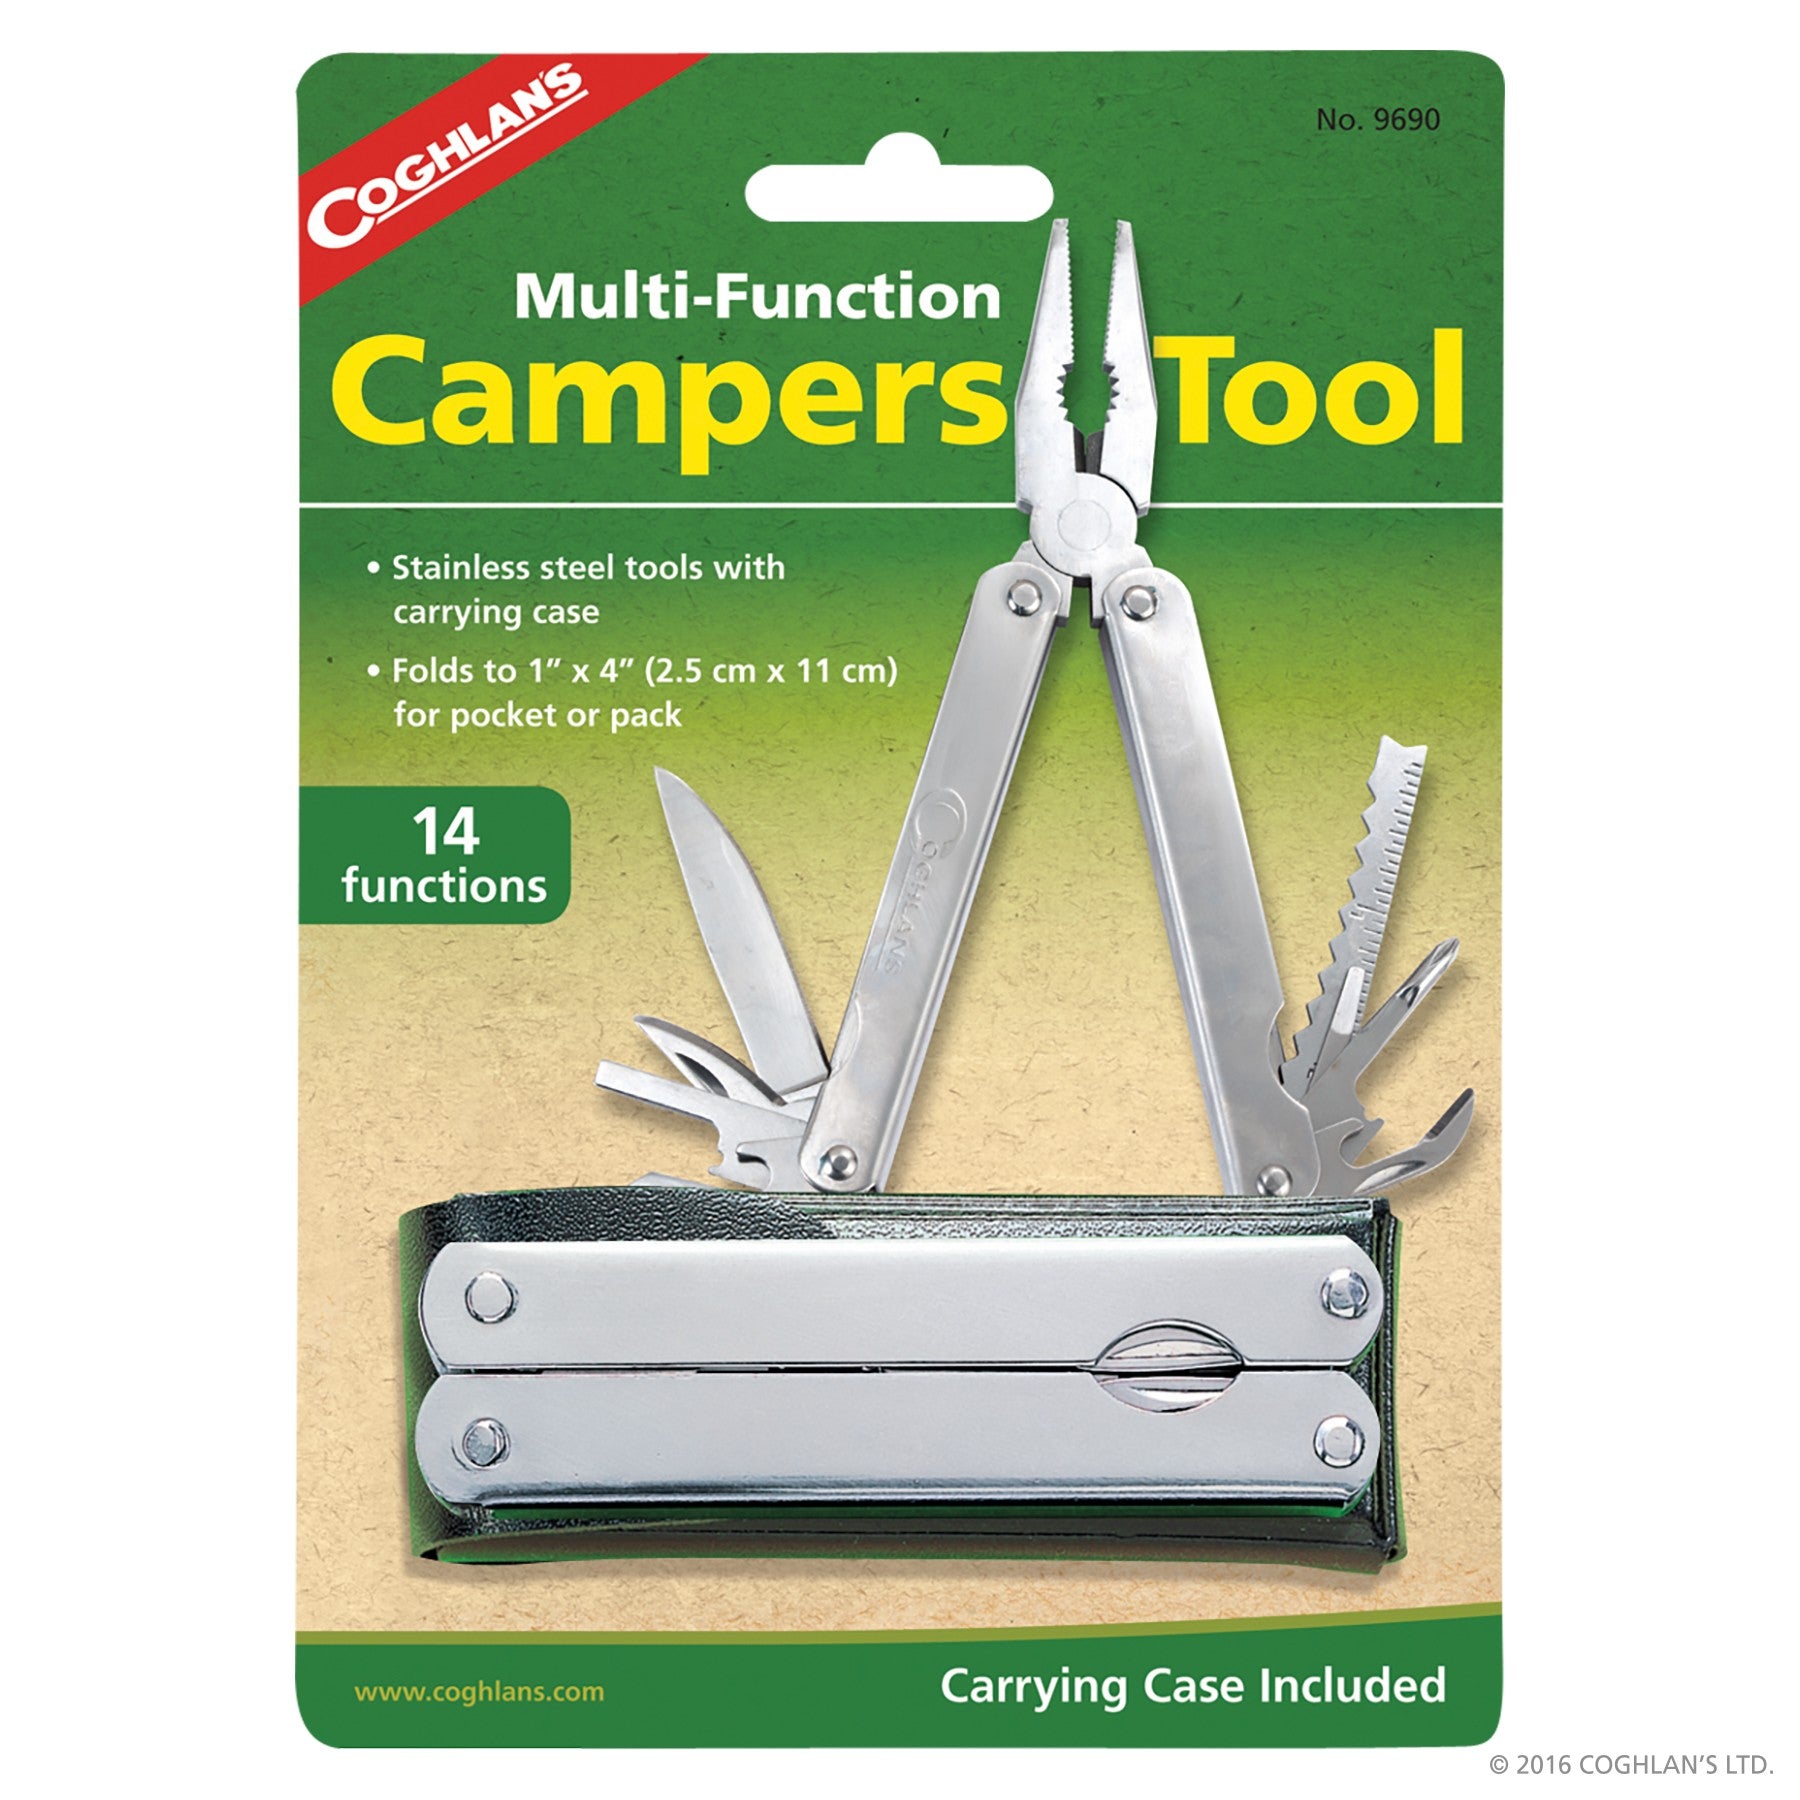 Coghlan's Multi-Function Camper's Tool